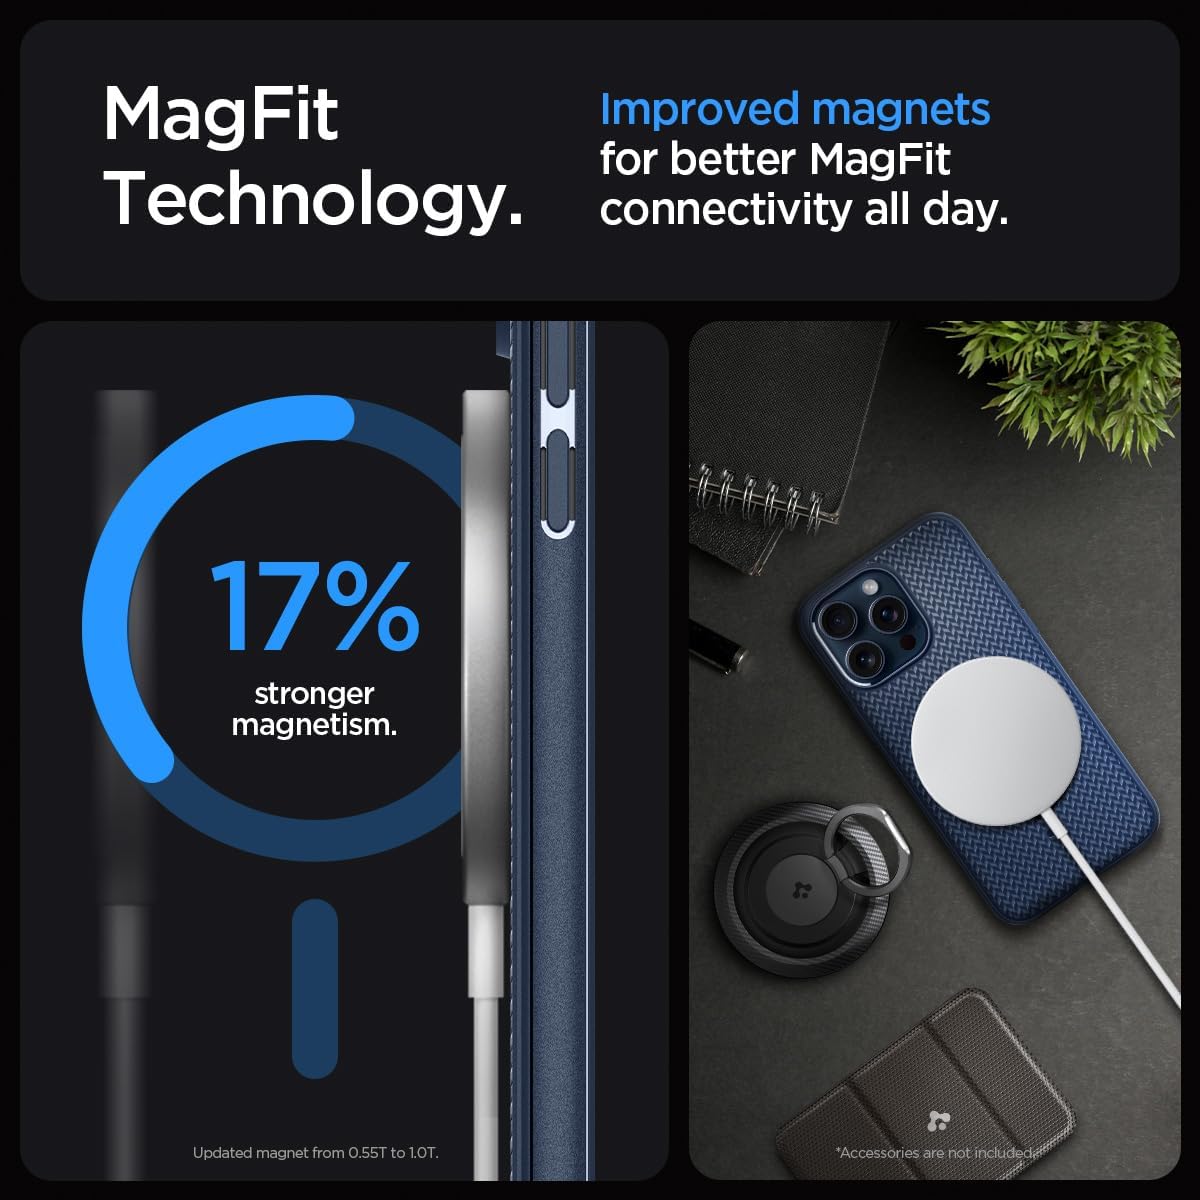 iPhone 15 Pro / 15 Pro Max Mag Armor (MagFit) Case